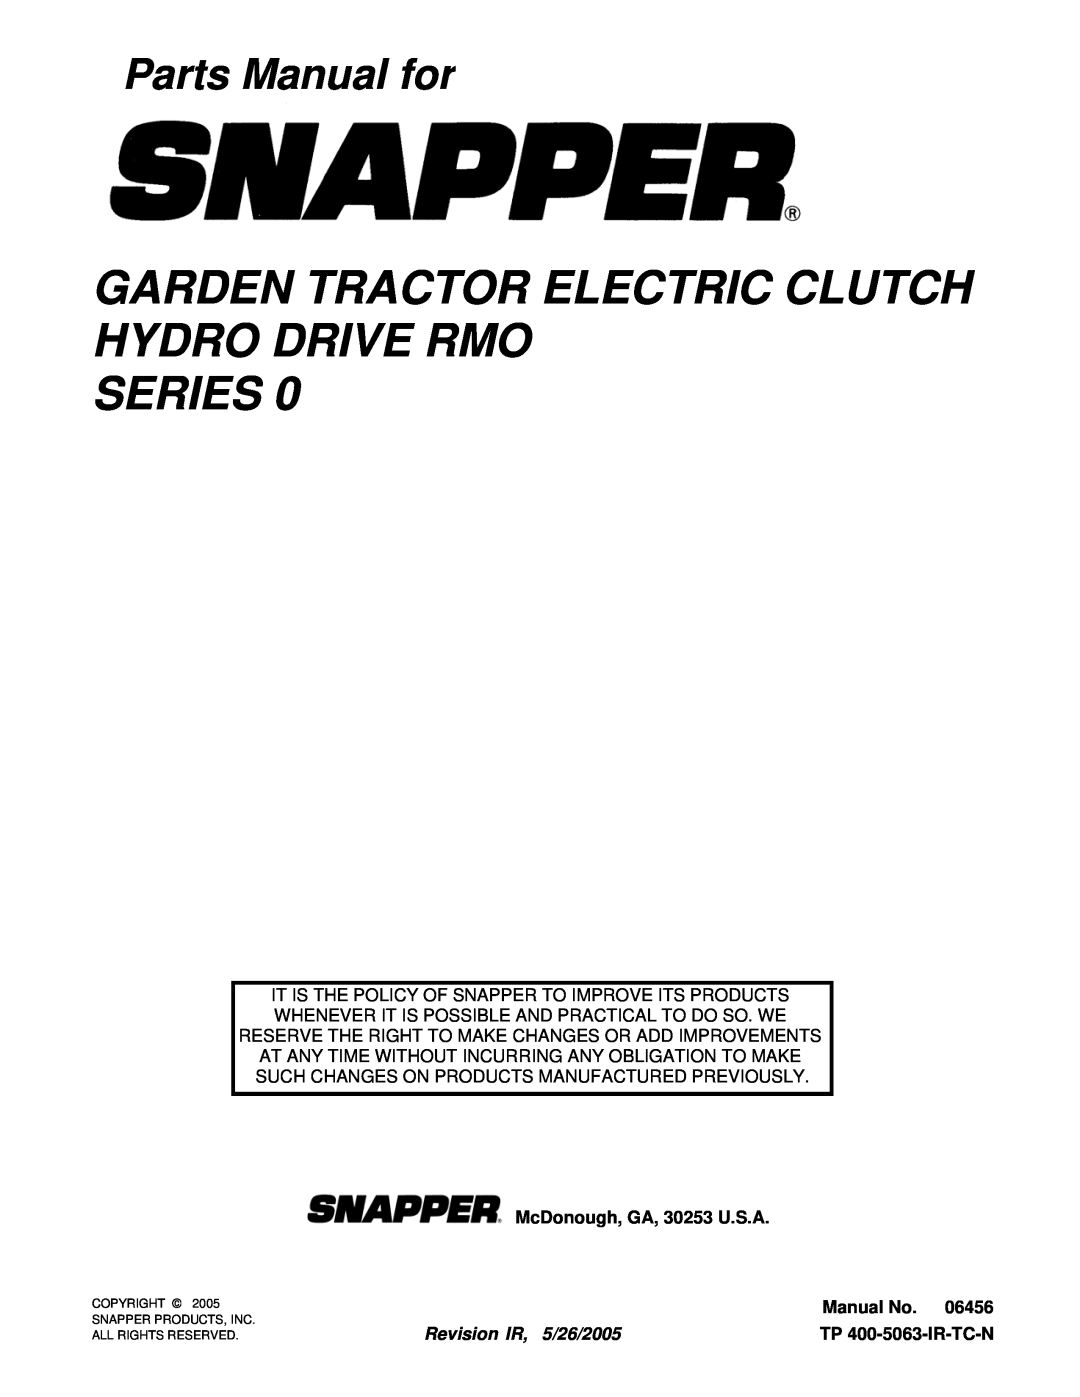 Snapper GT23540 manual Garden Tractor Electric Clutch Hydro Drive Rmo Series, Parts Manual for, McDonough, GA, 30253 U.S.A 